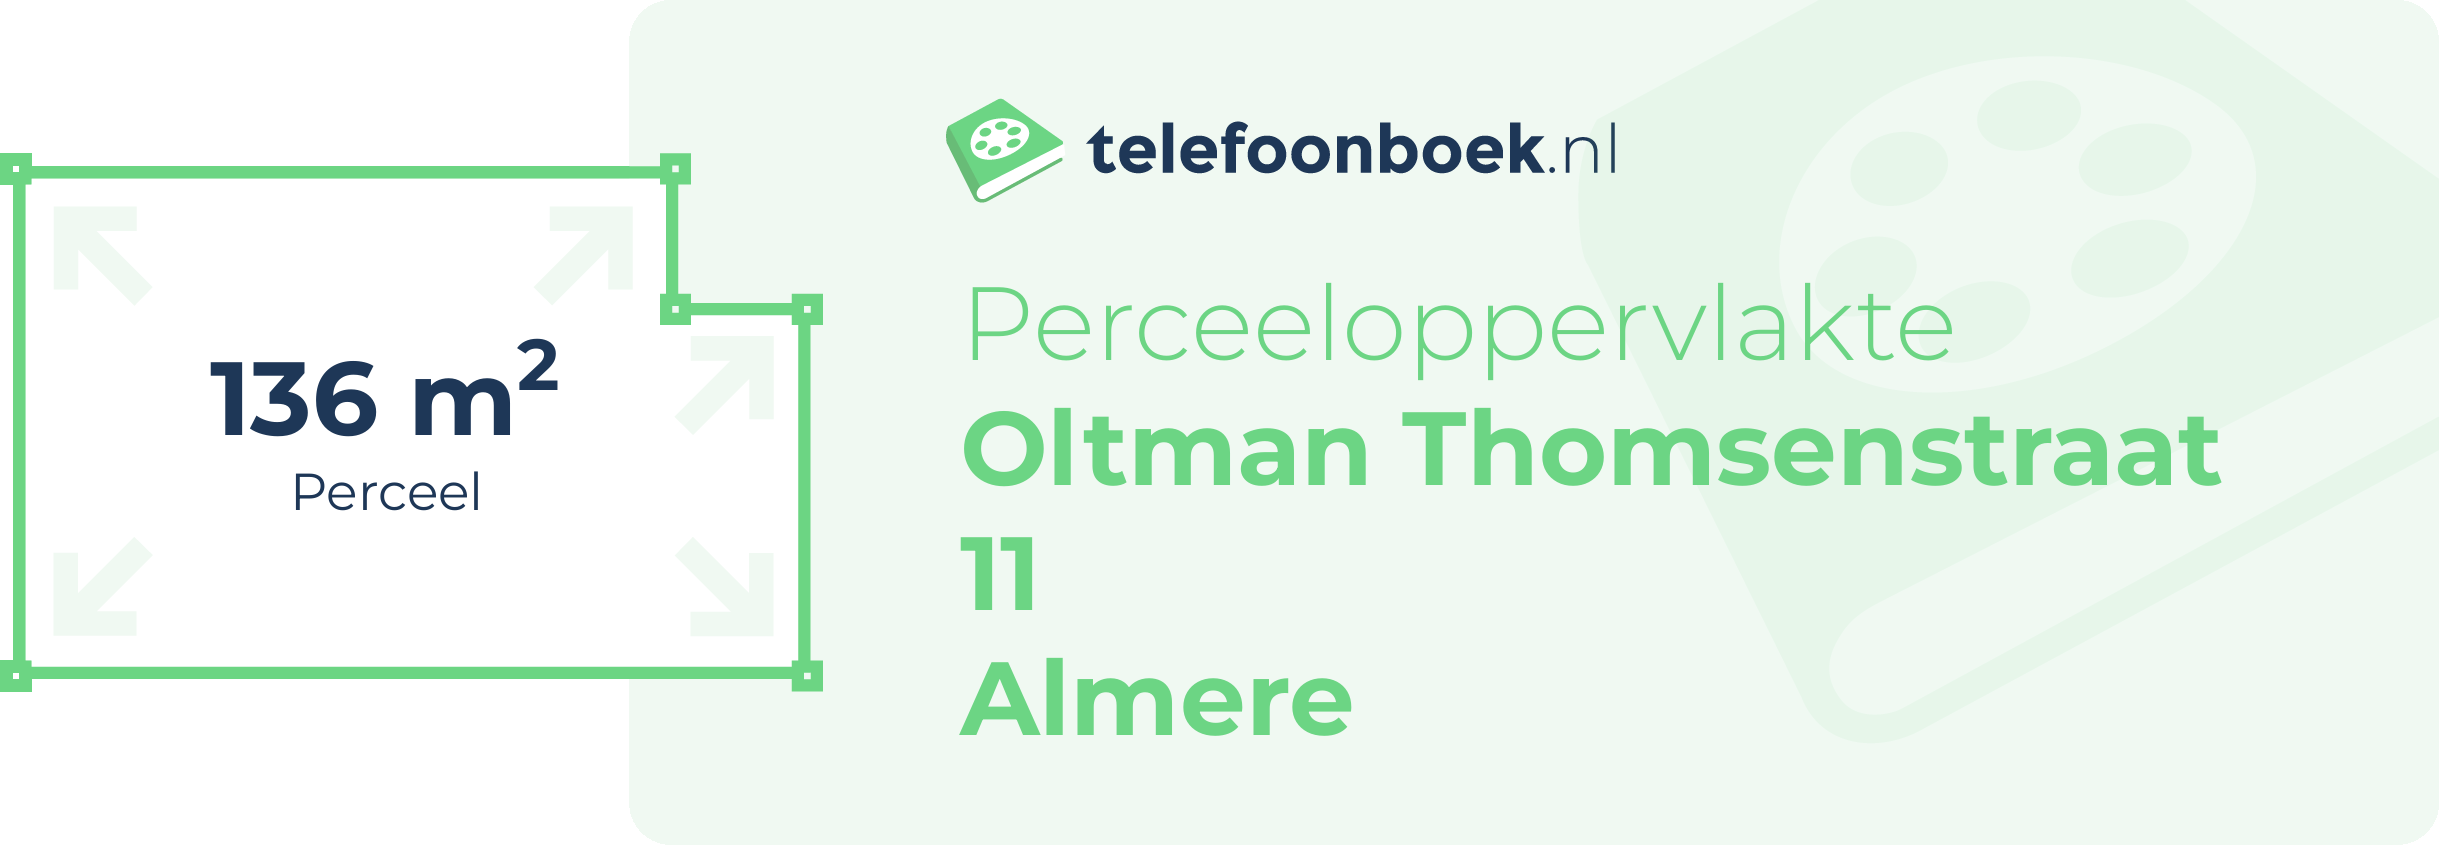 Perceeloppervlakte Oltman Thomsenstraat 11 Almere